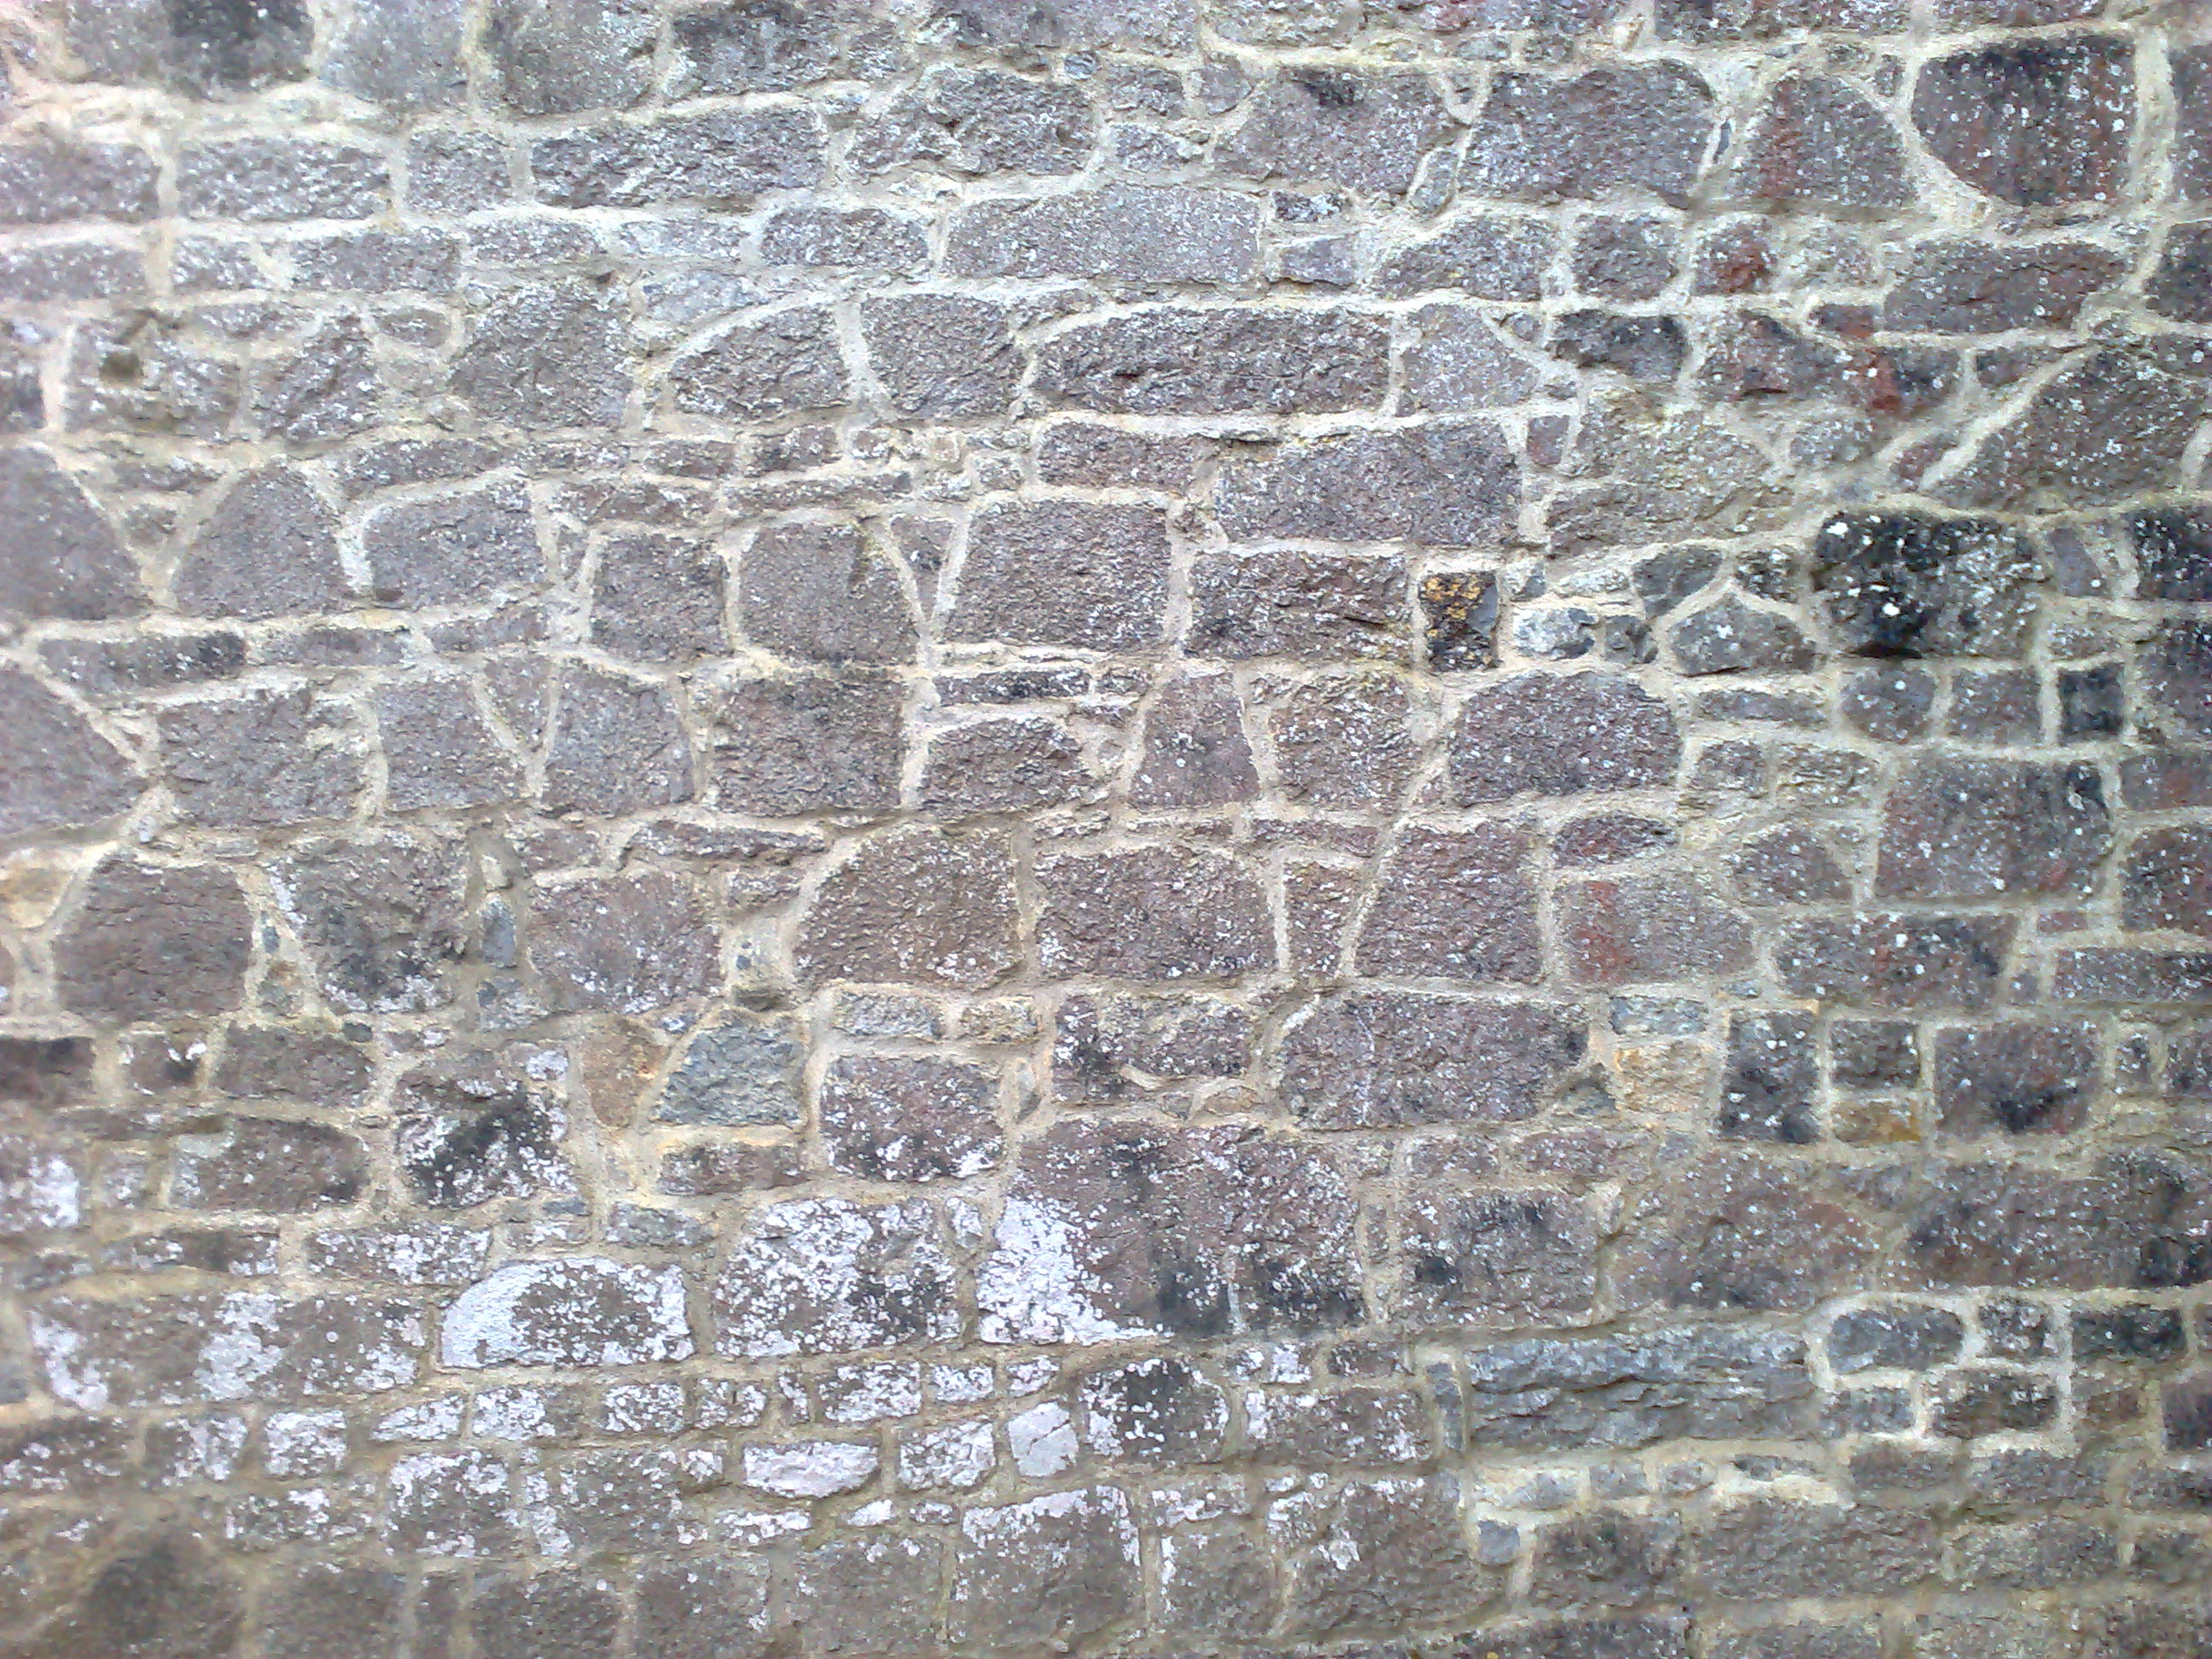 File:Stone church wall texture limerick ireland.jpg - Wikimedia Commons